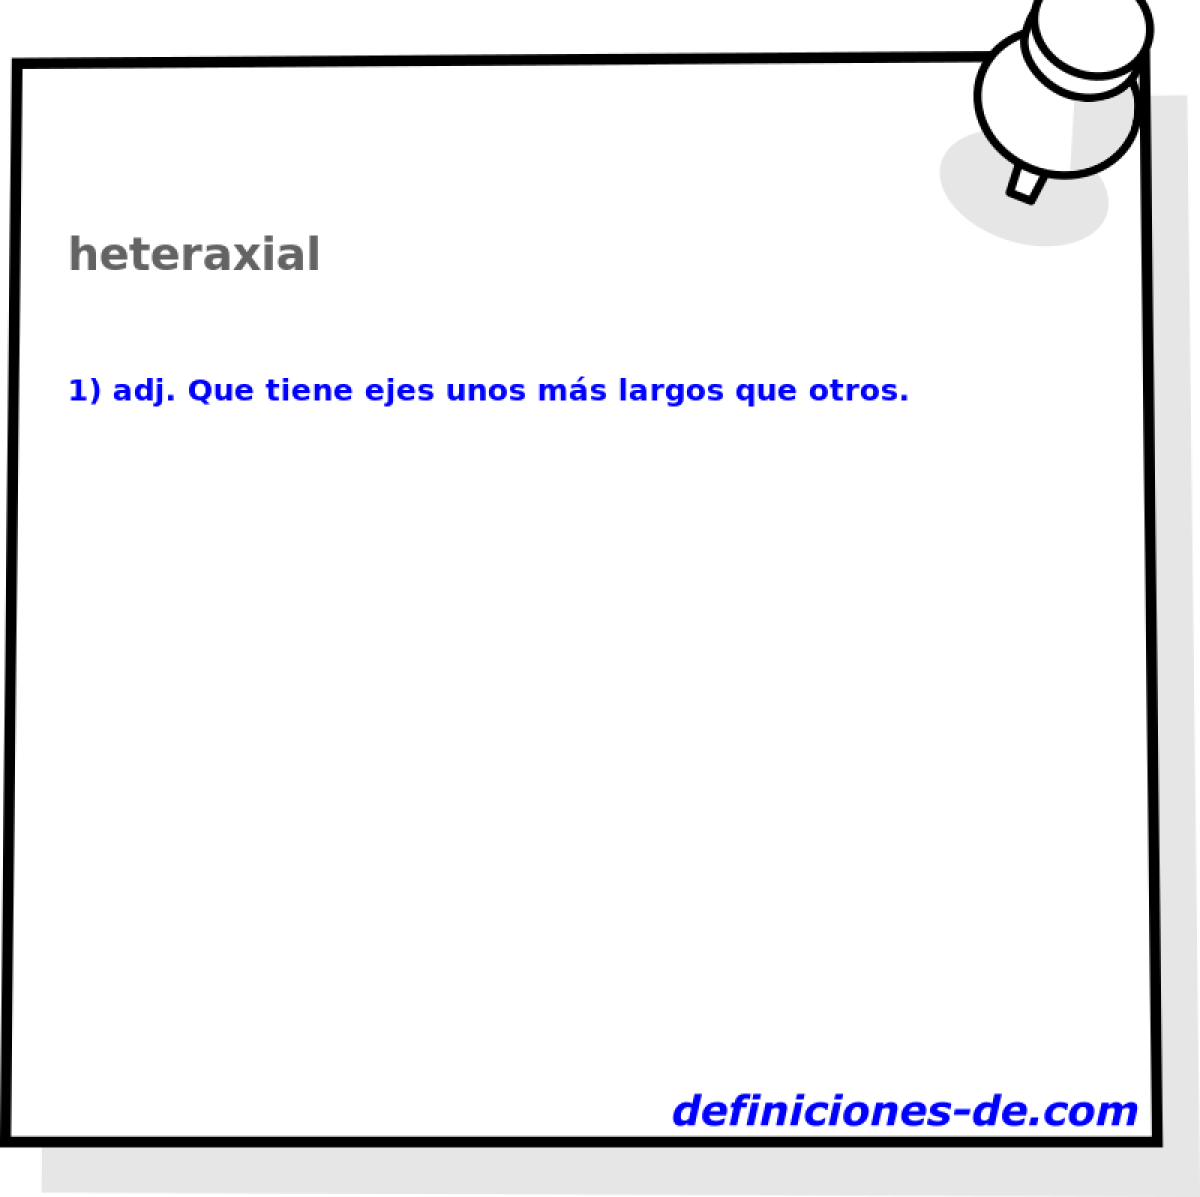 heteraxial 